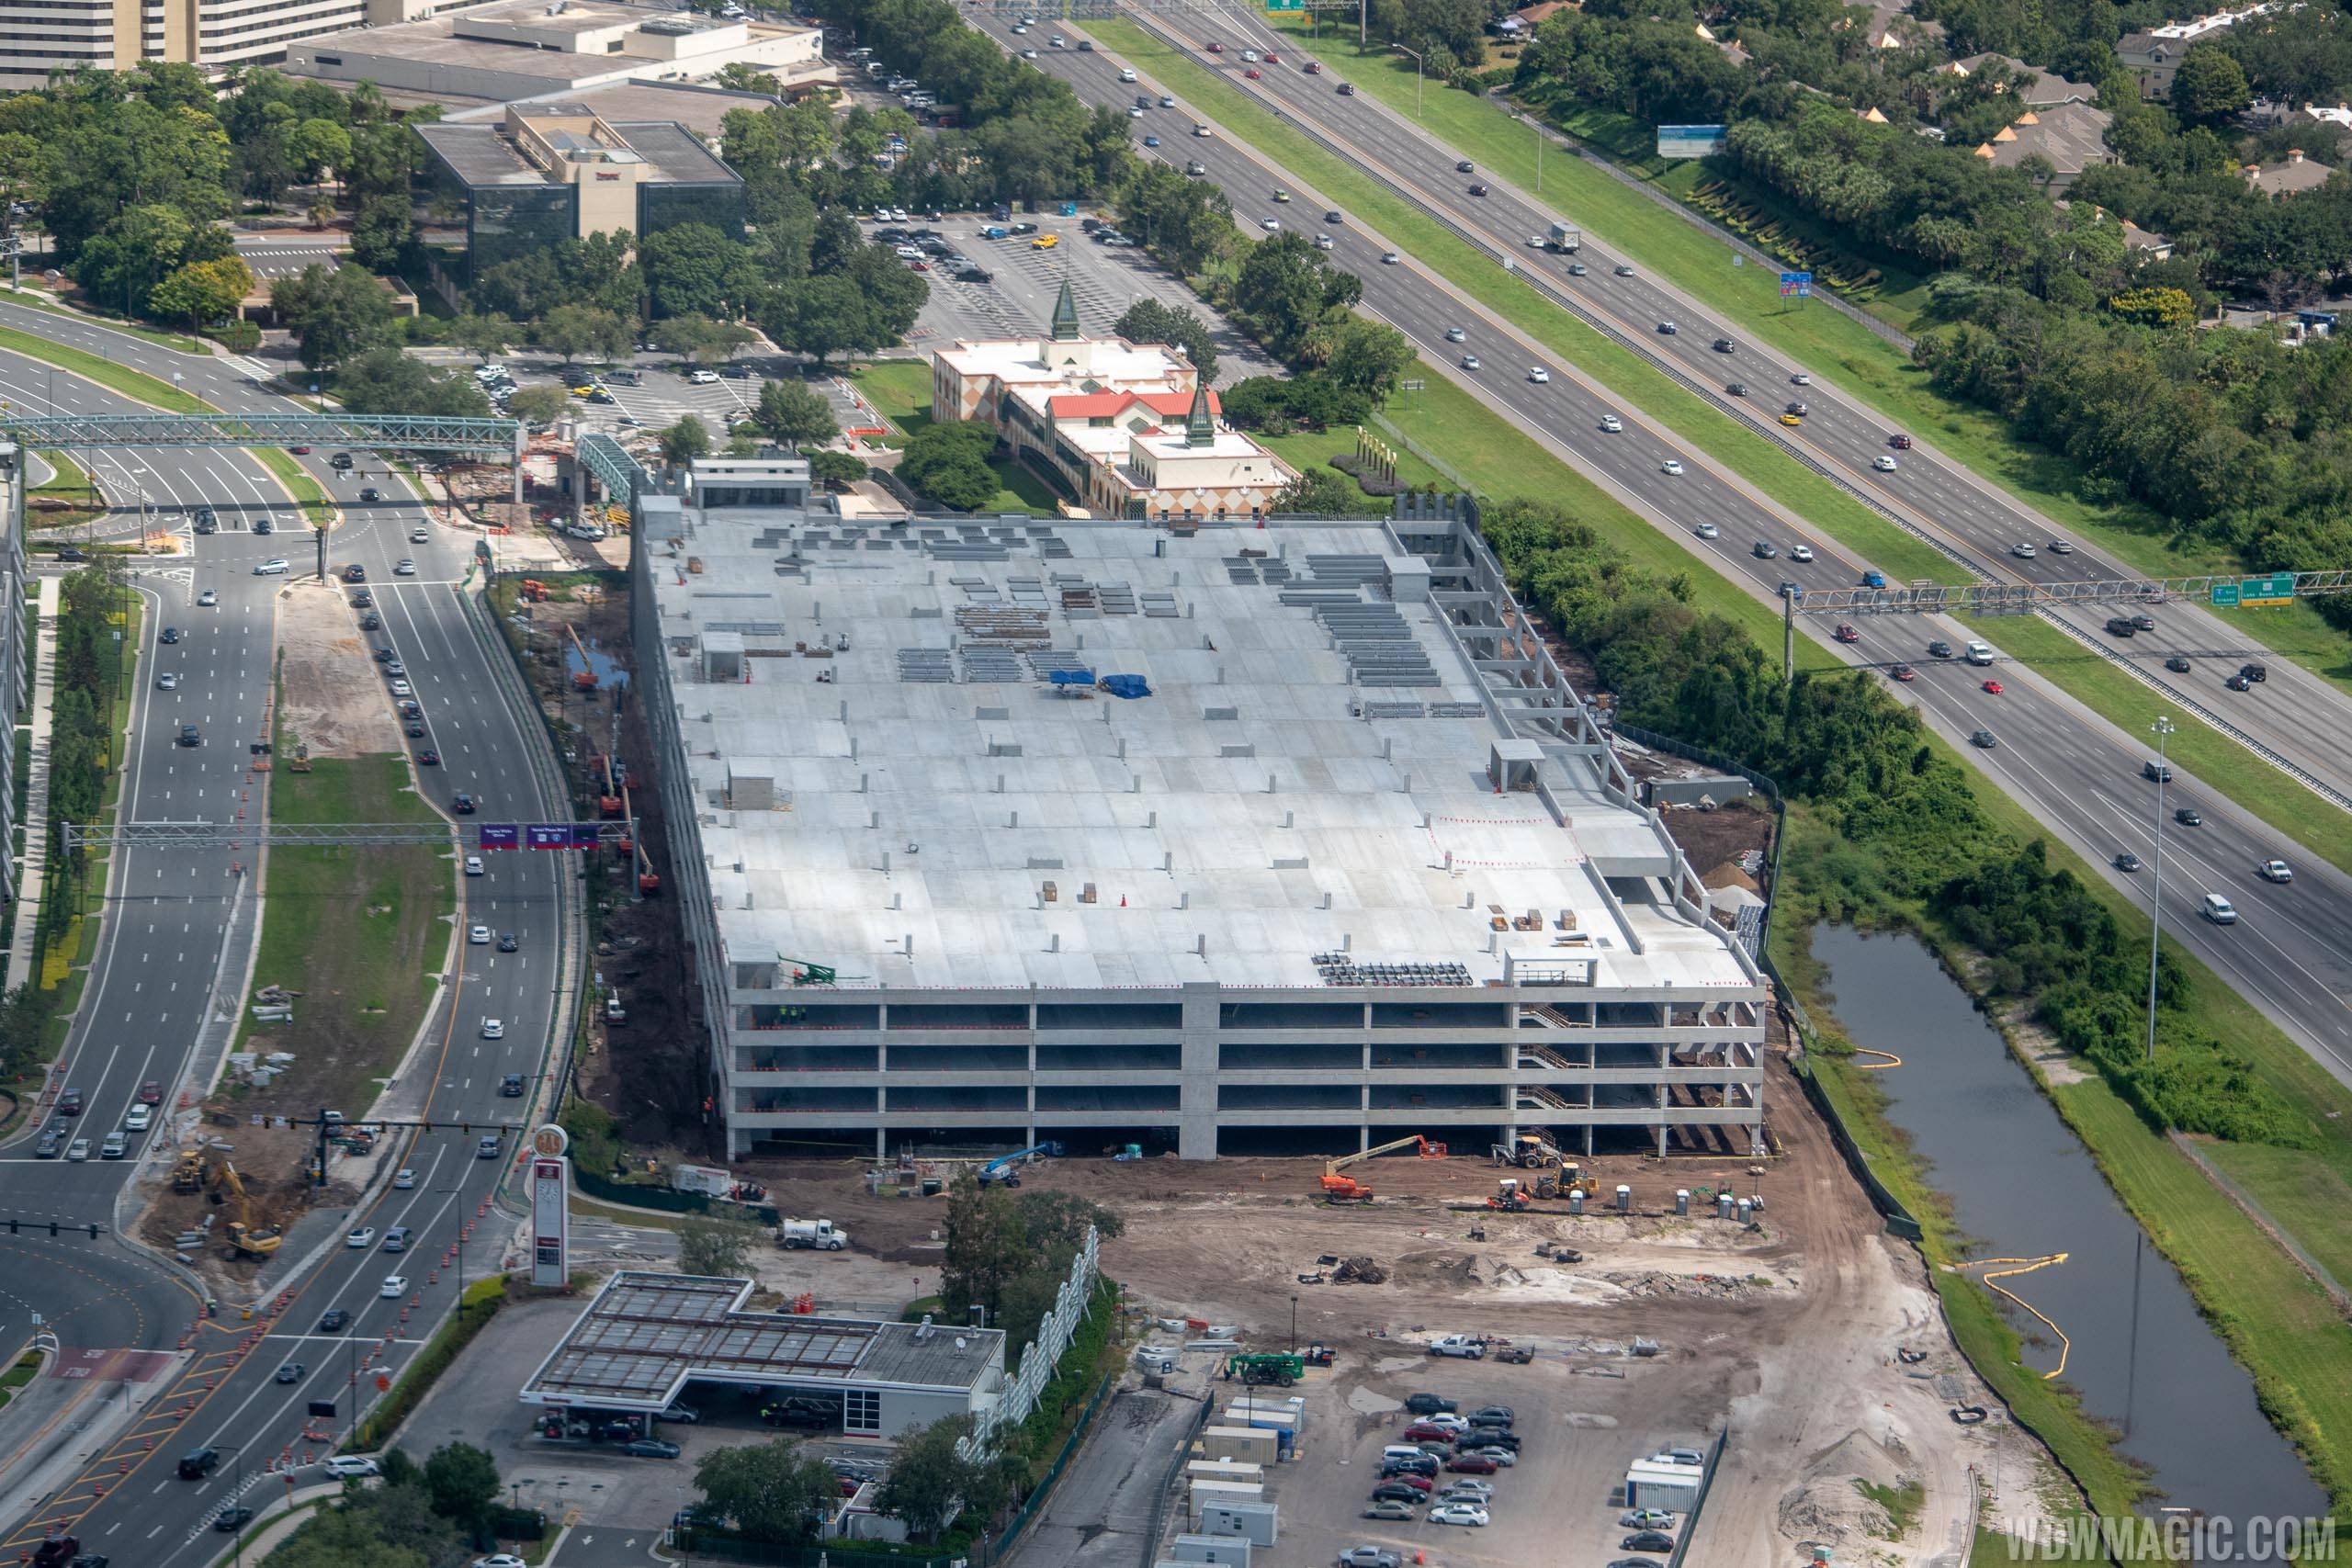 Disney Springs third parking lot construction - September 2018